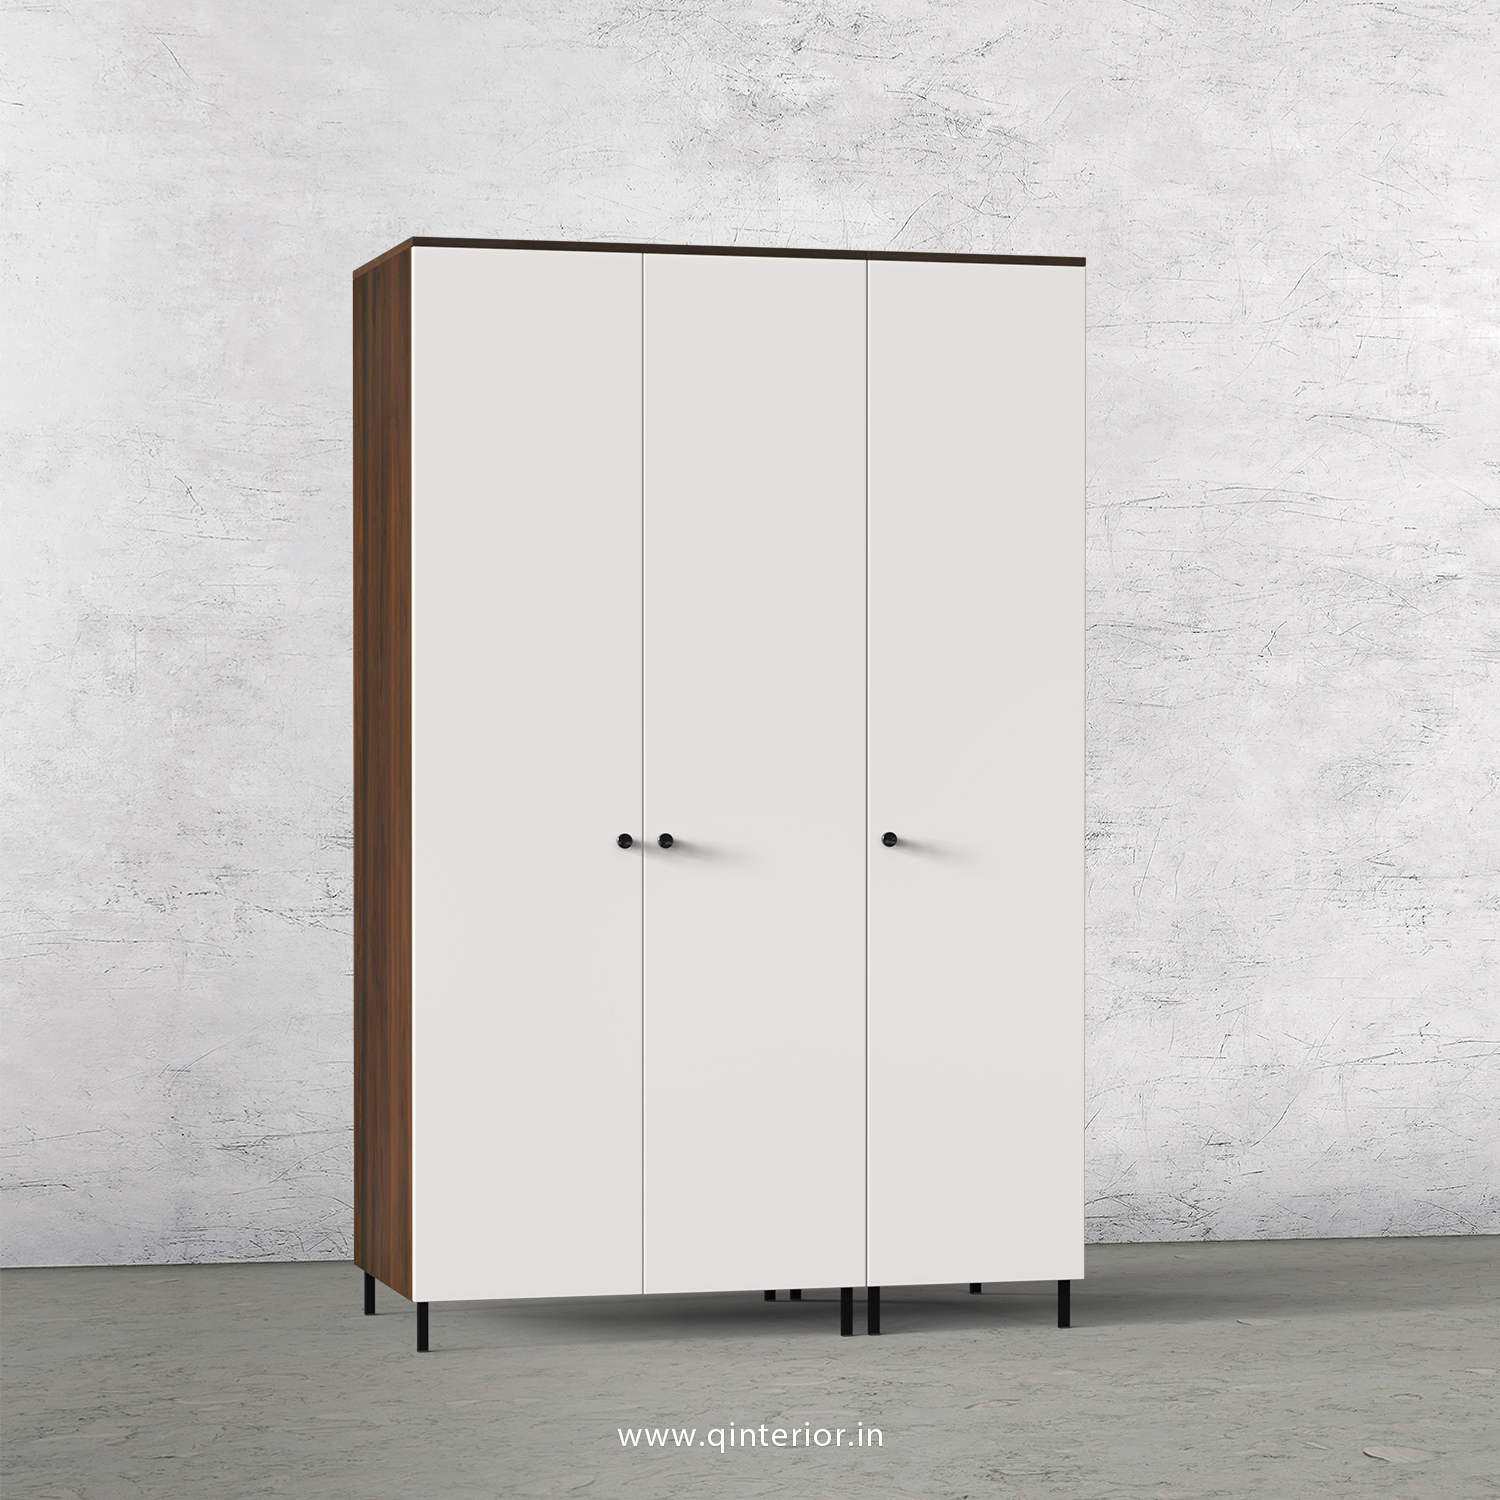 Lambent 3 Door Wardrobe in Walnut and Pale grey Finish – TWRD001 C23